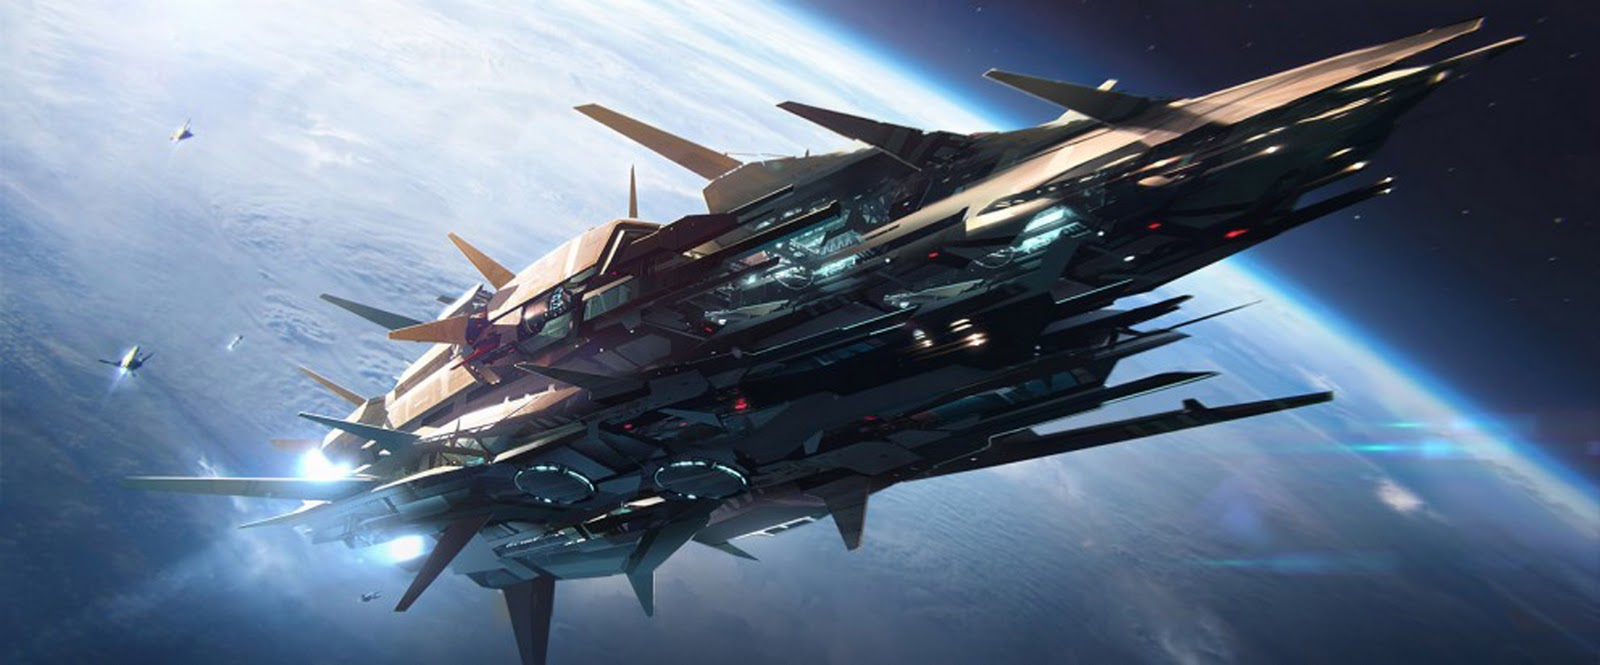 dreamscape+star+wars+warship+armada+cruiser+futuristic+sci+fi+spaceship+iv+by+jamshed+jurabaev.jpg